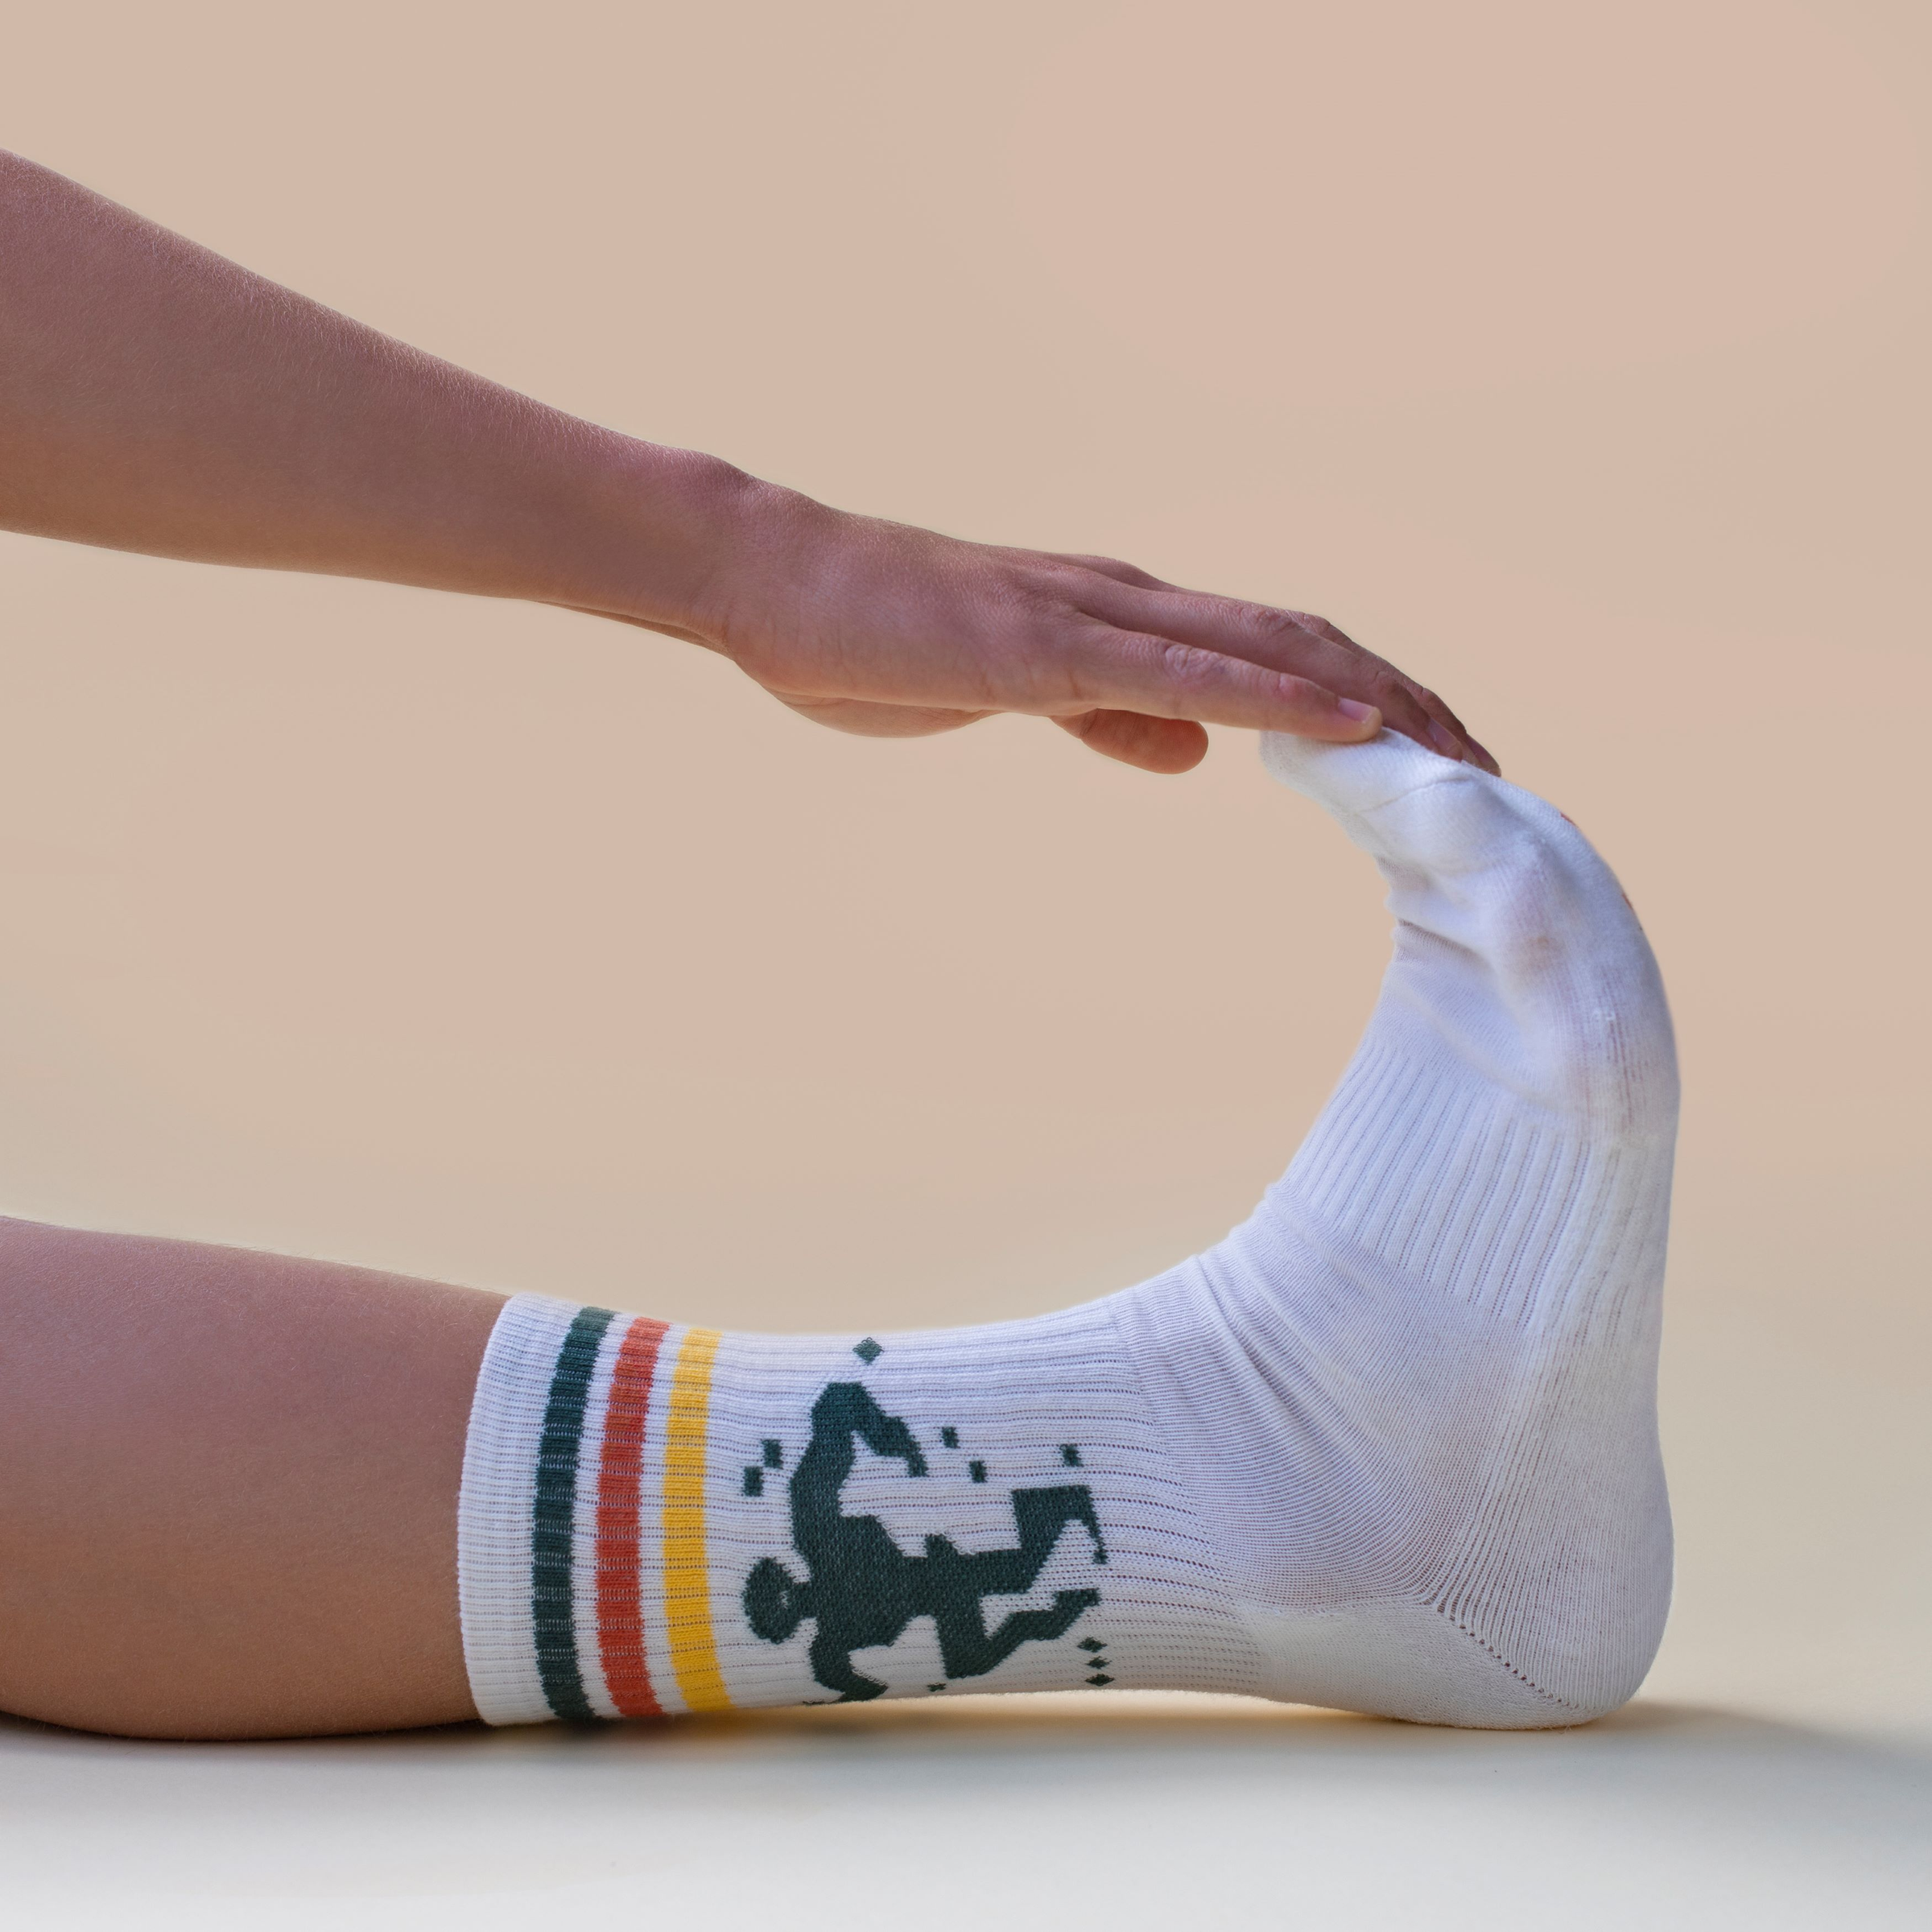 PAAR Socks Sports Socks Collection